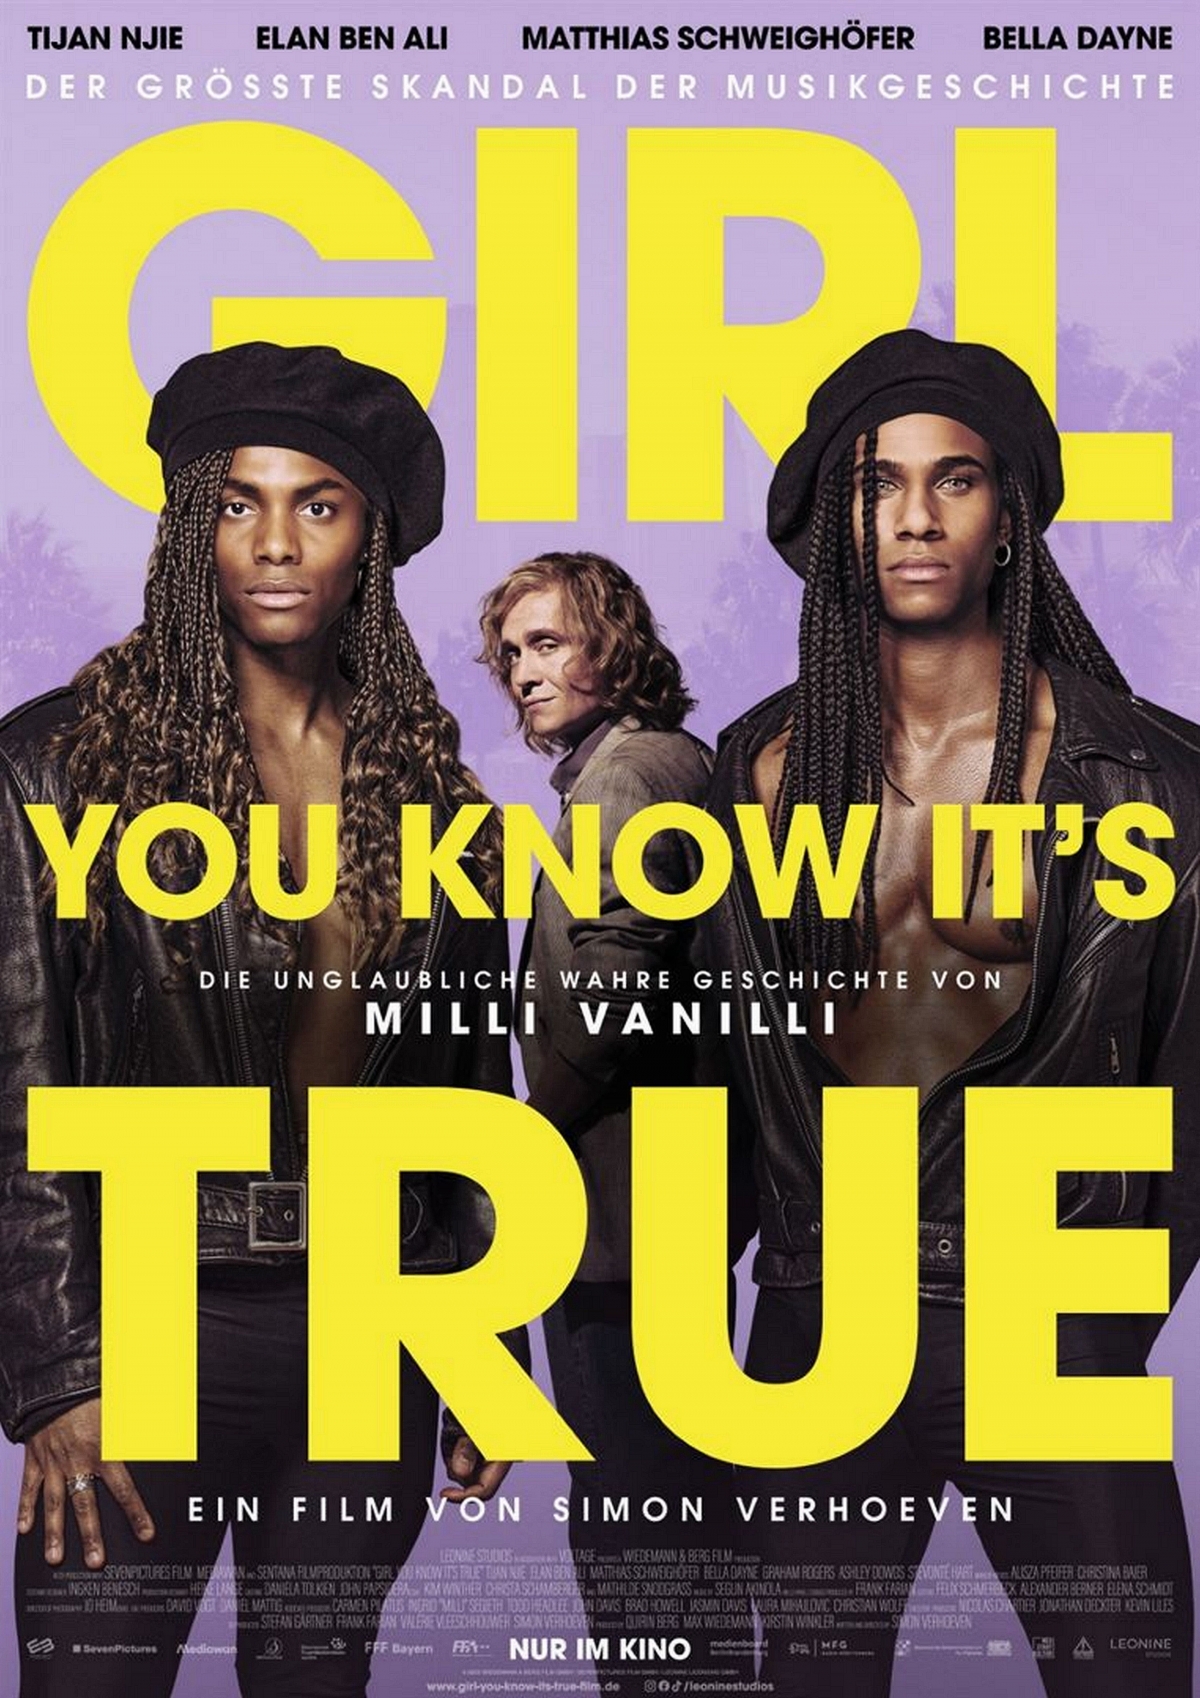 Segun scores Milli Vanilli biopic &#039;Girl You Know It&#039;s True&#039;